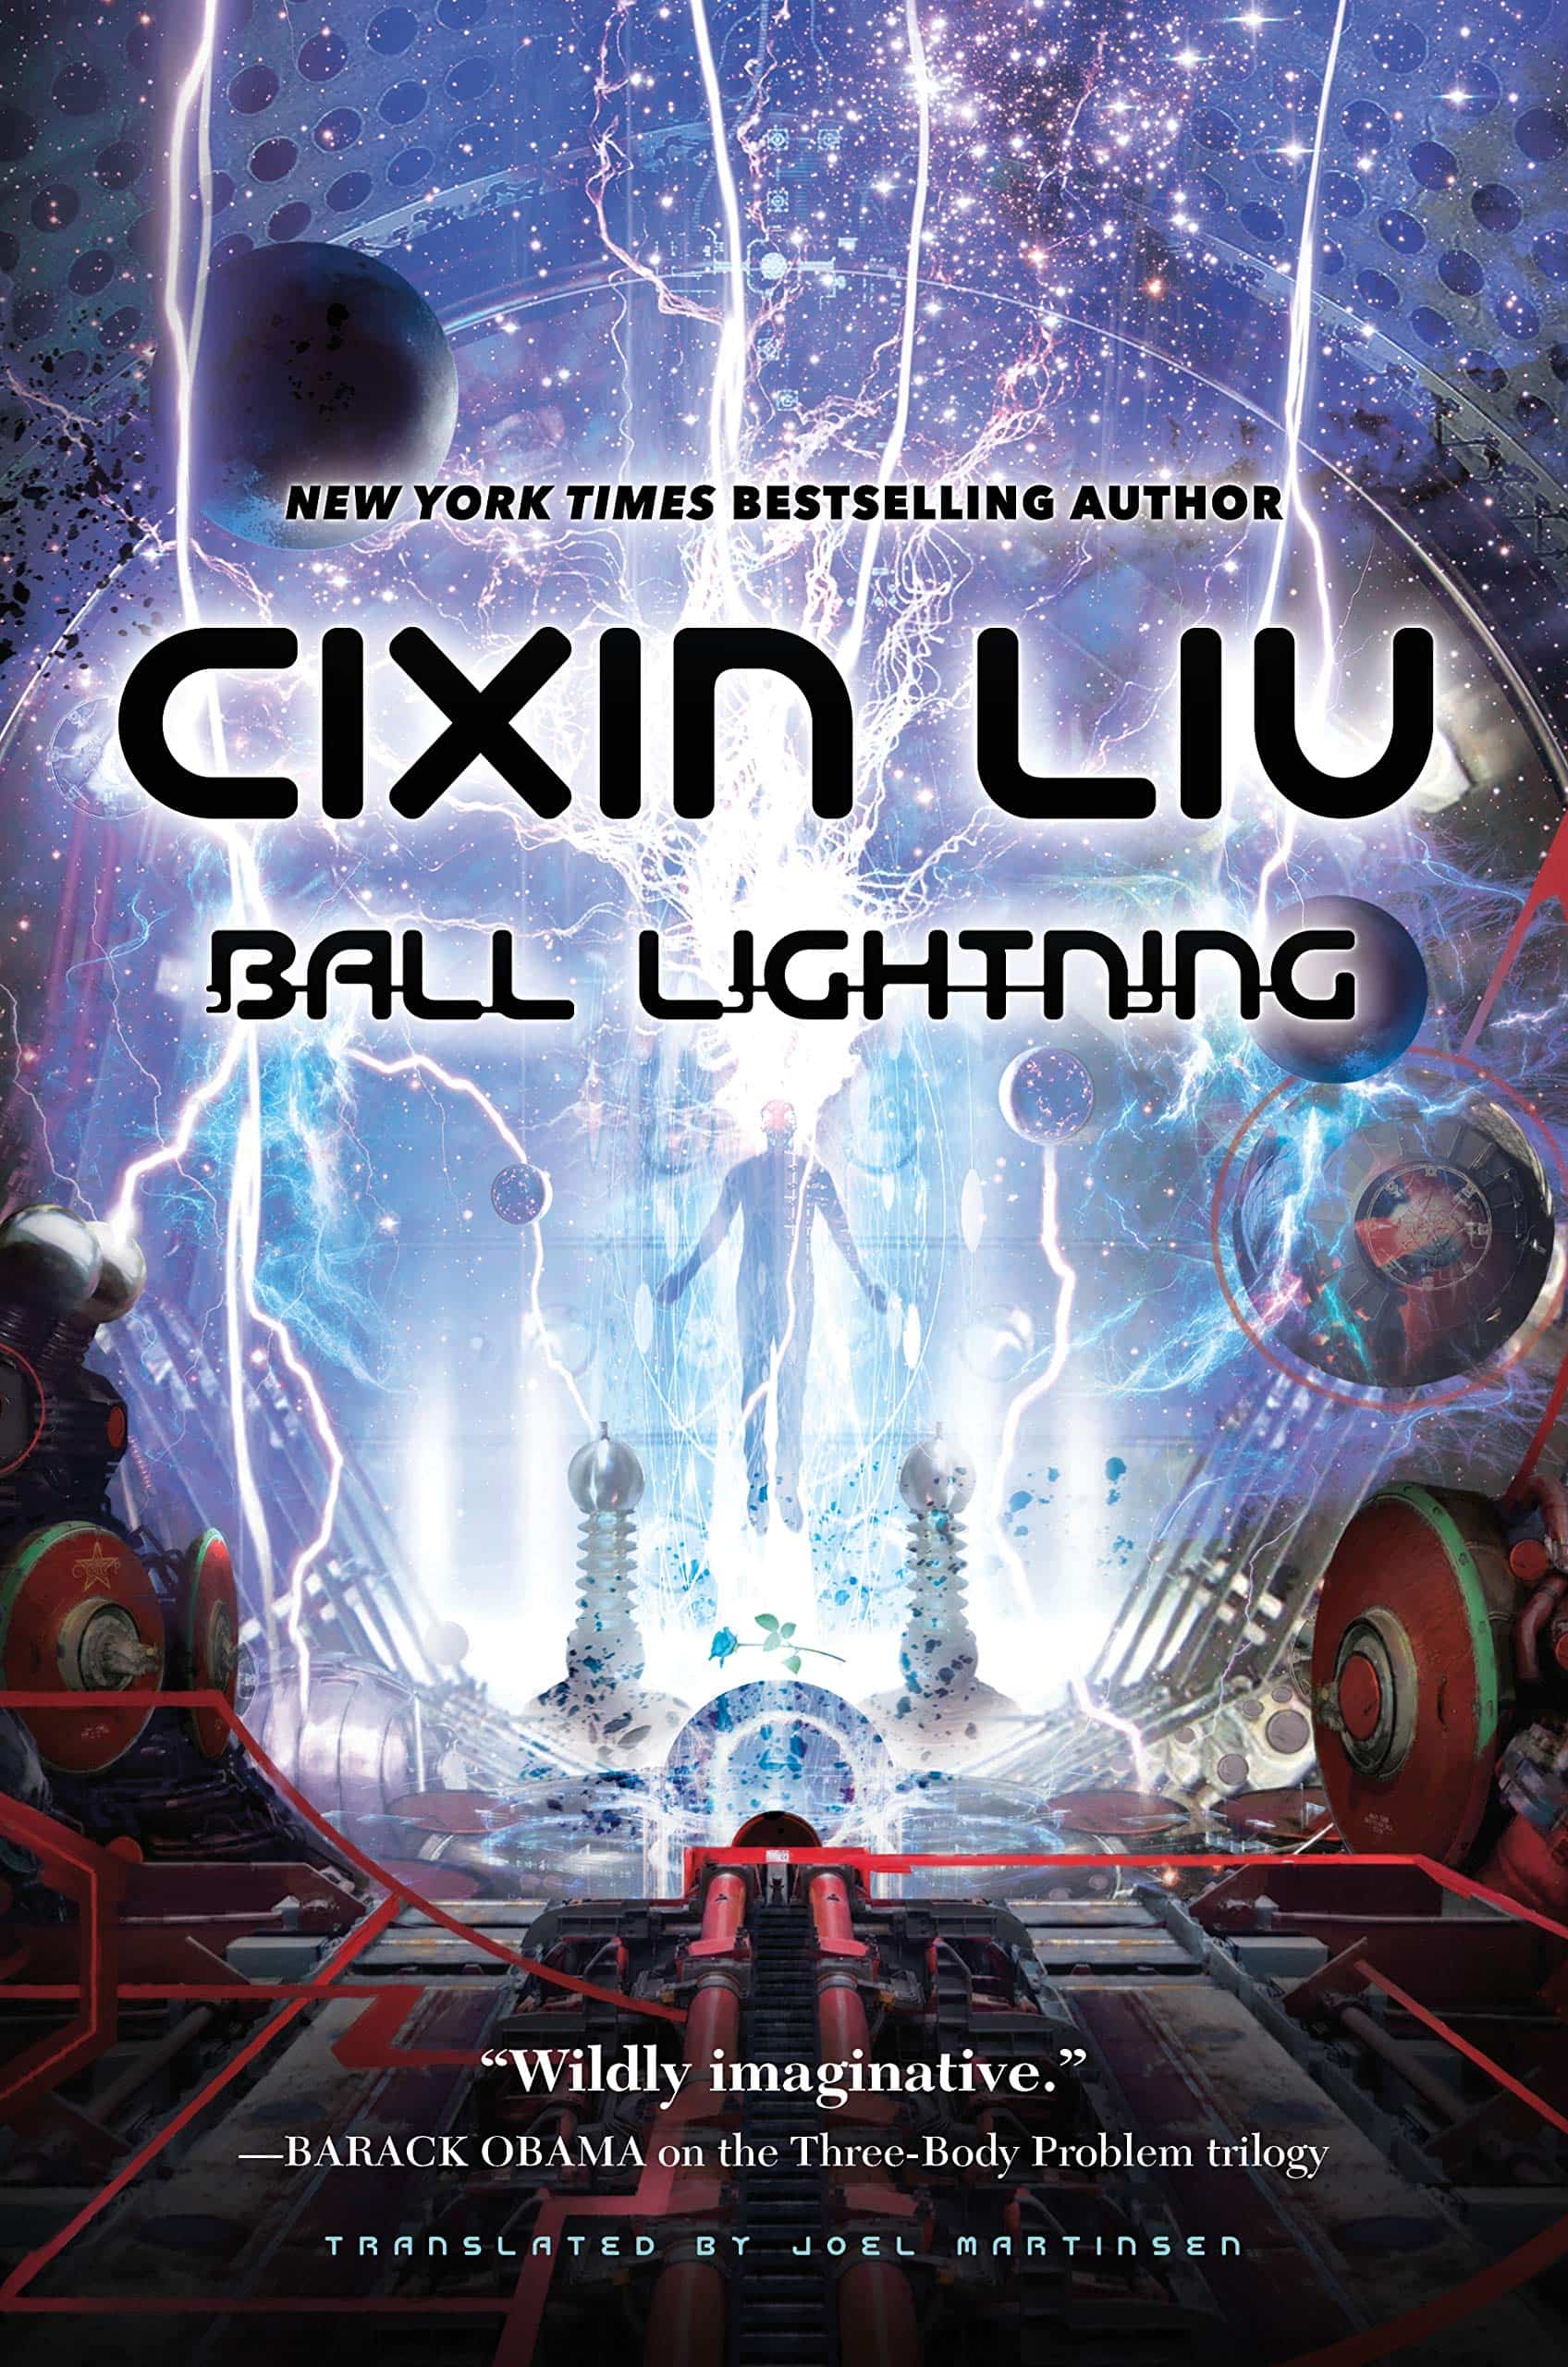 The cover of Ball Lightning